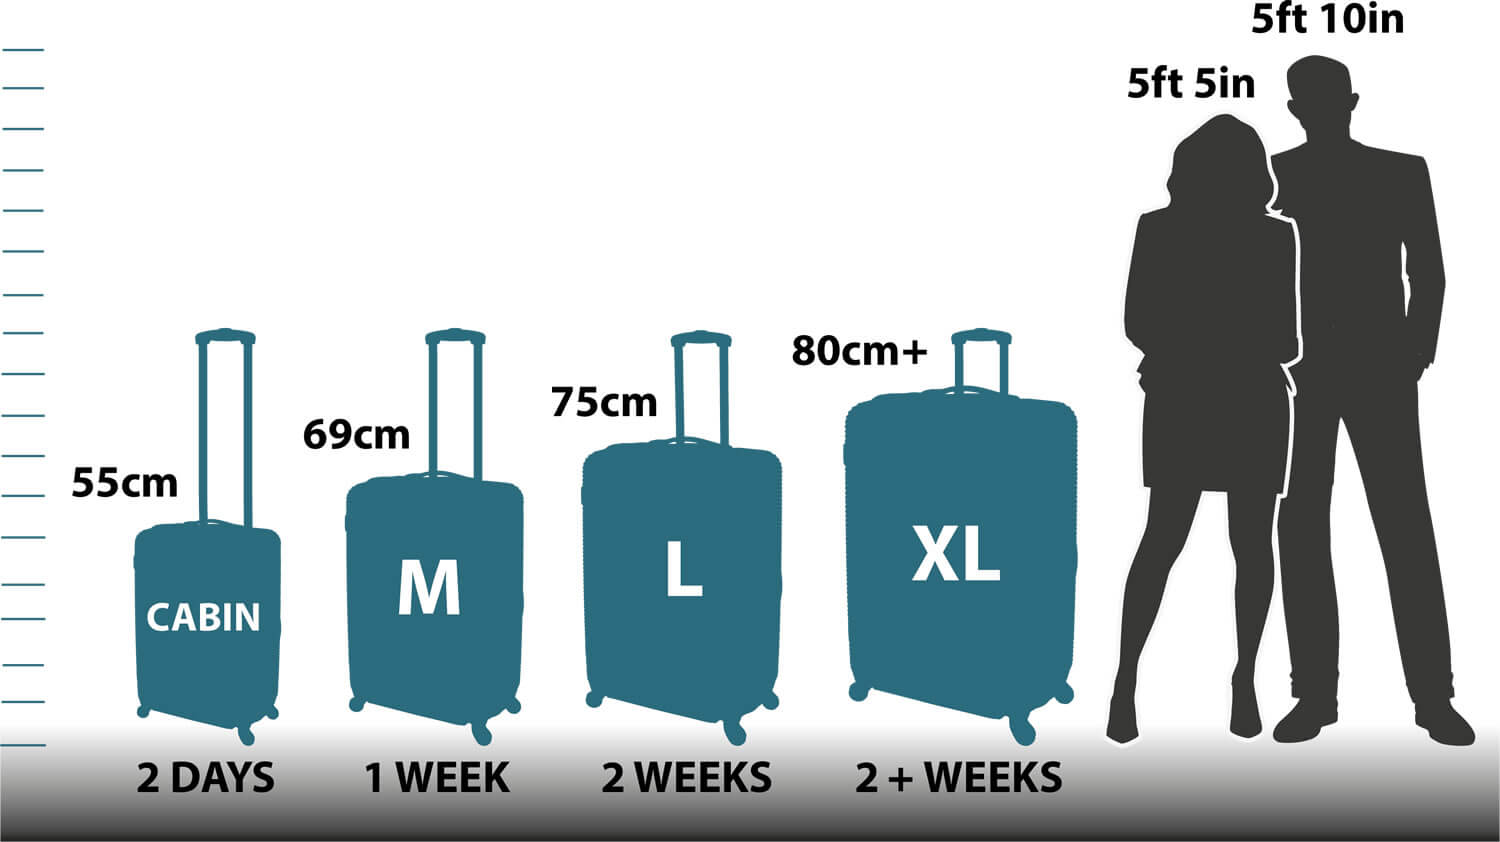 25 kg travel bag dimensions